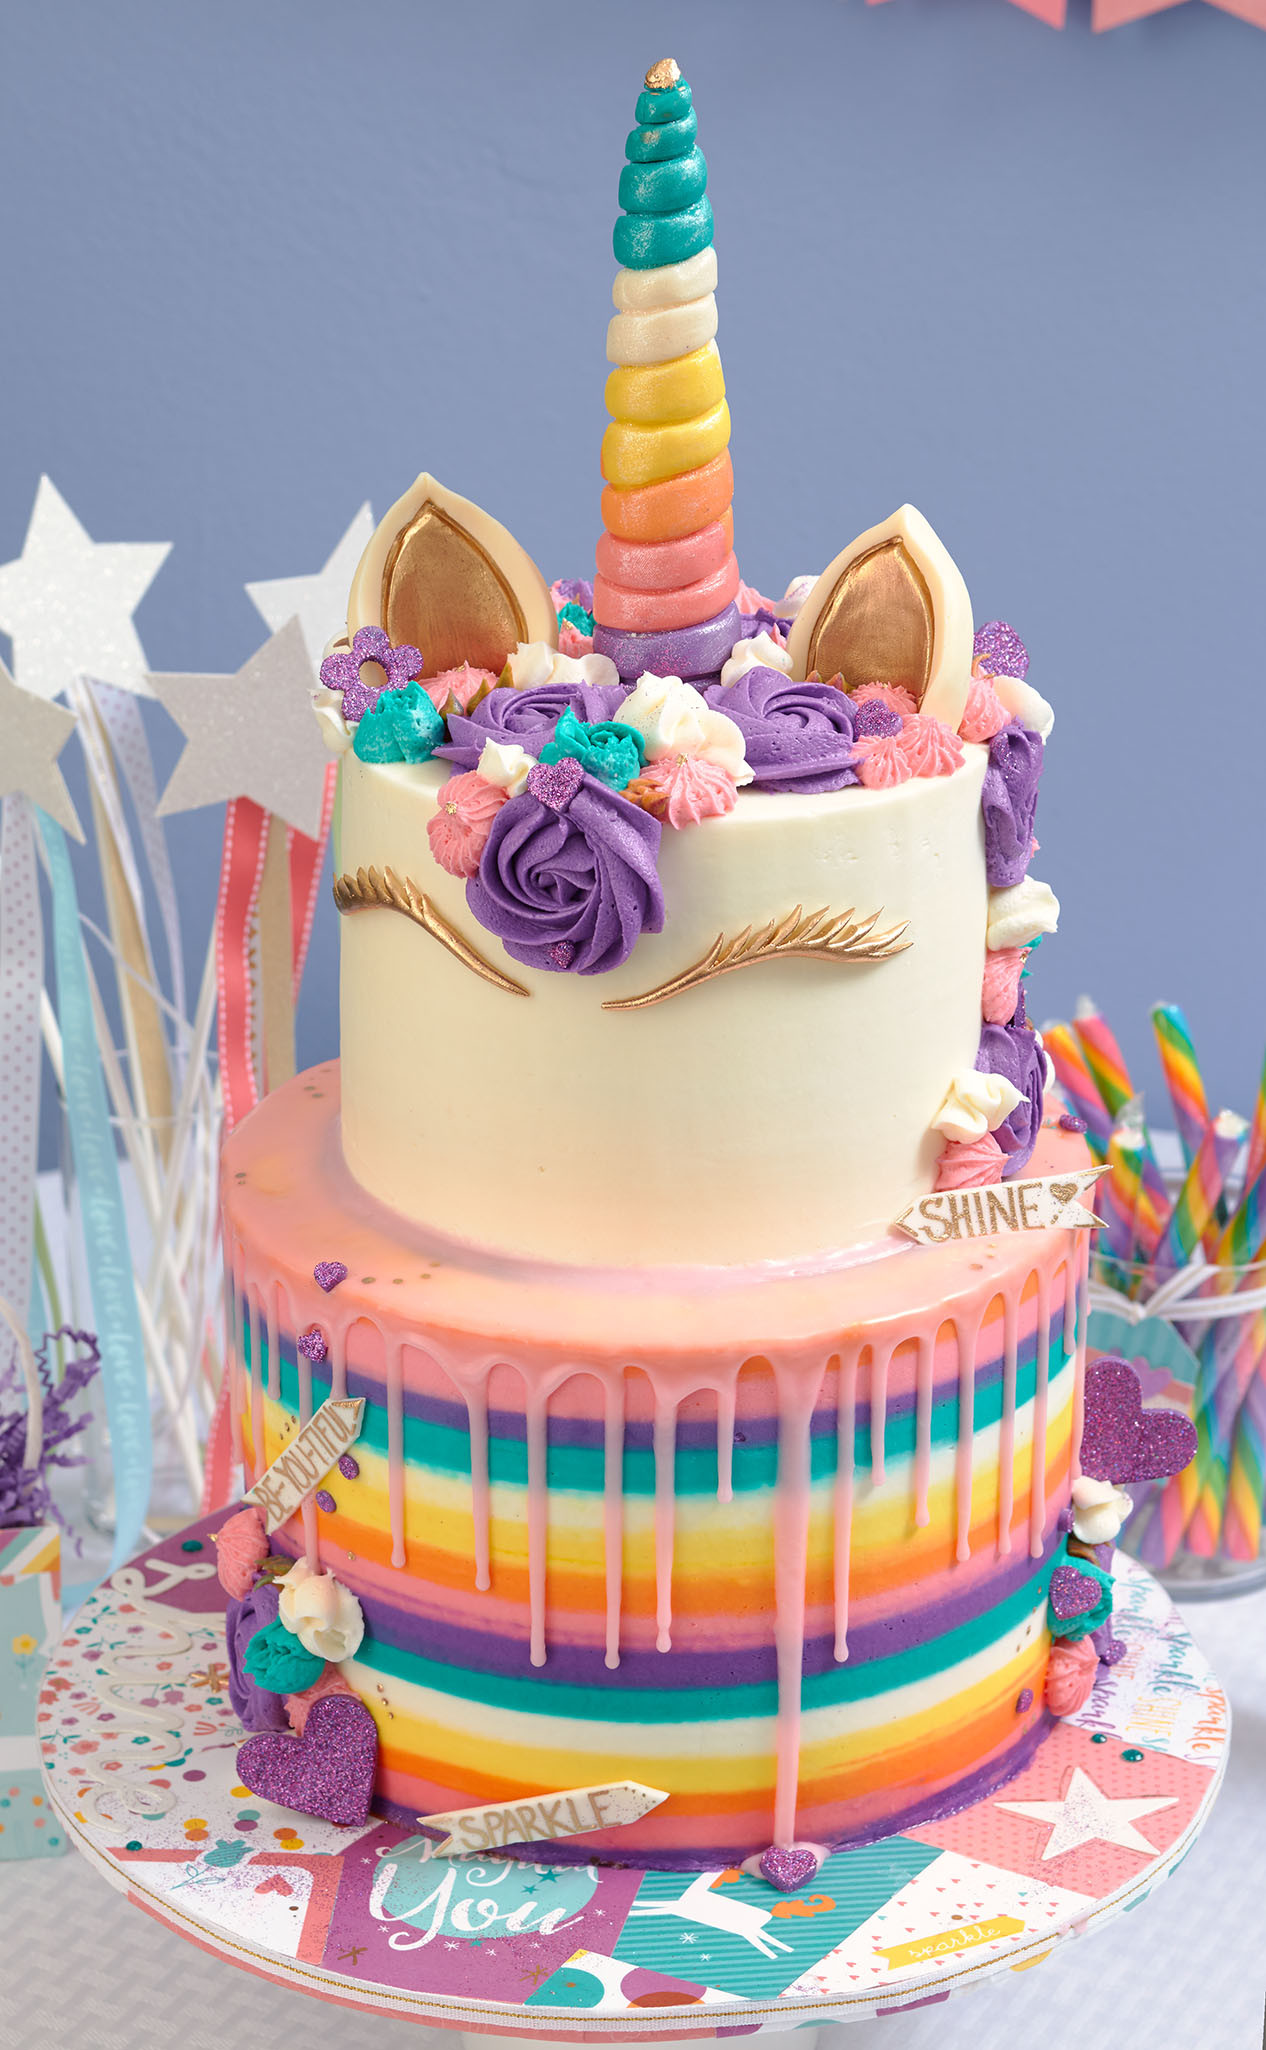 Unicorn Birthday Party Decorations Ideas
 This Unicorn Party Takes the Cake